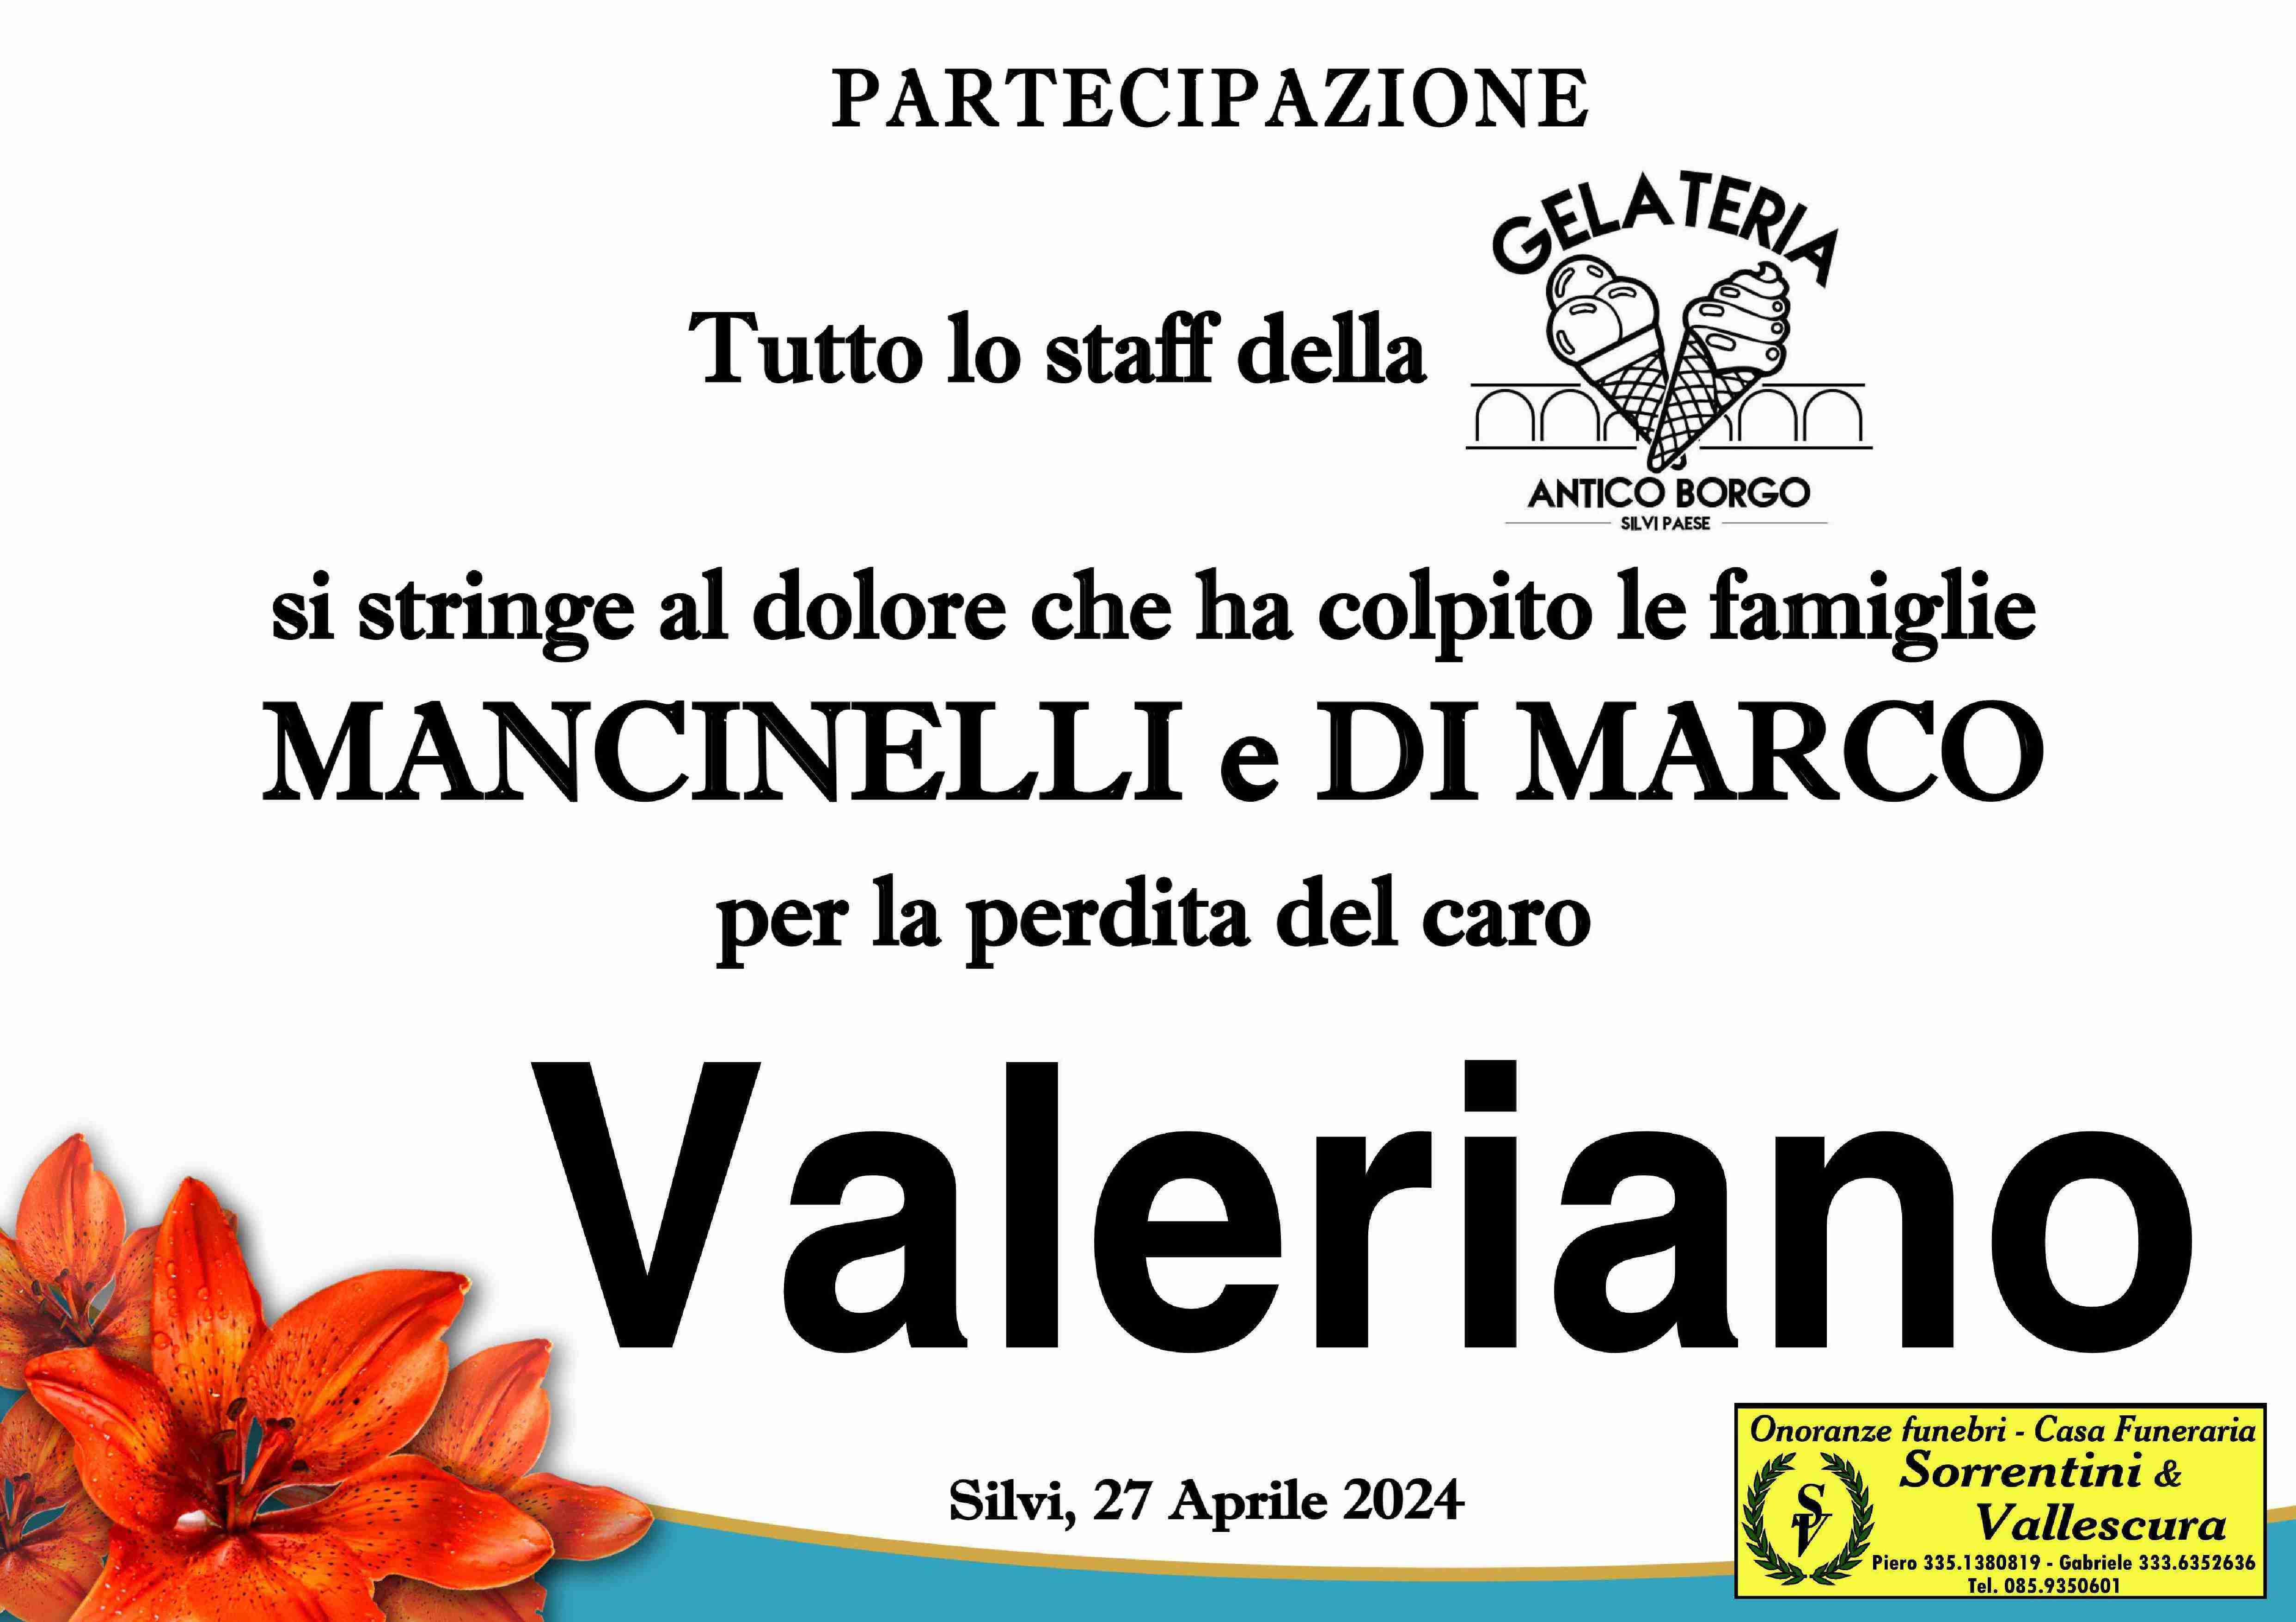 Valeriano Mancinelli